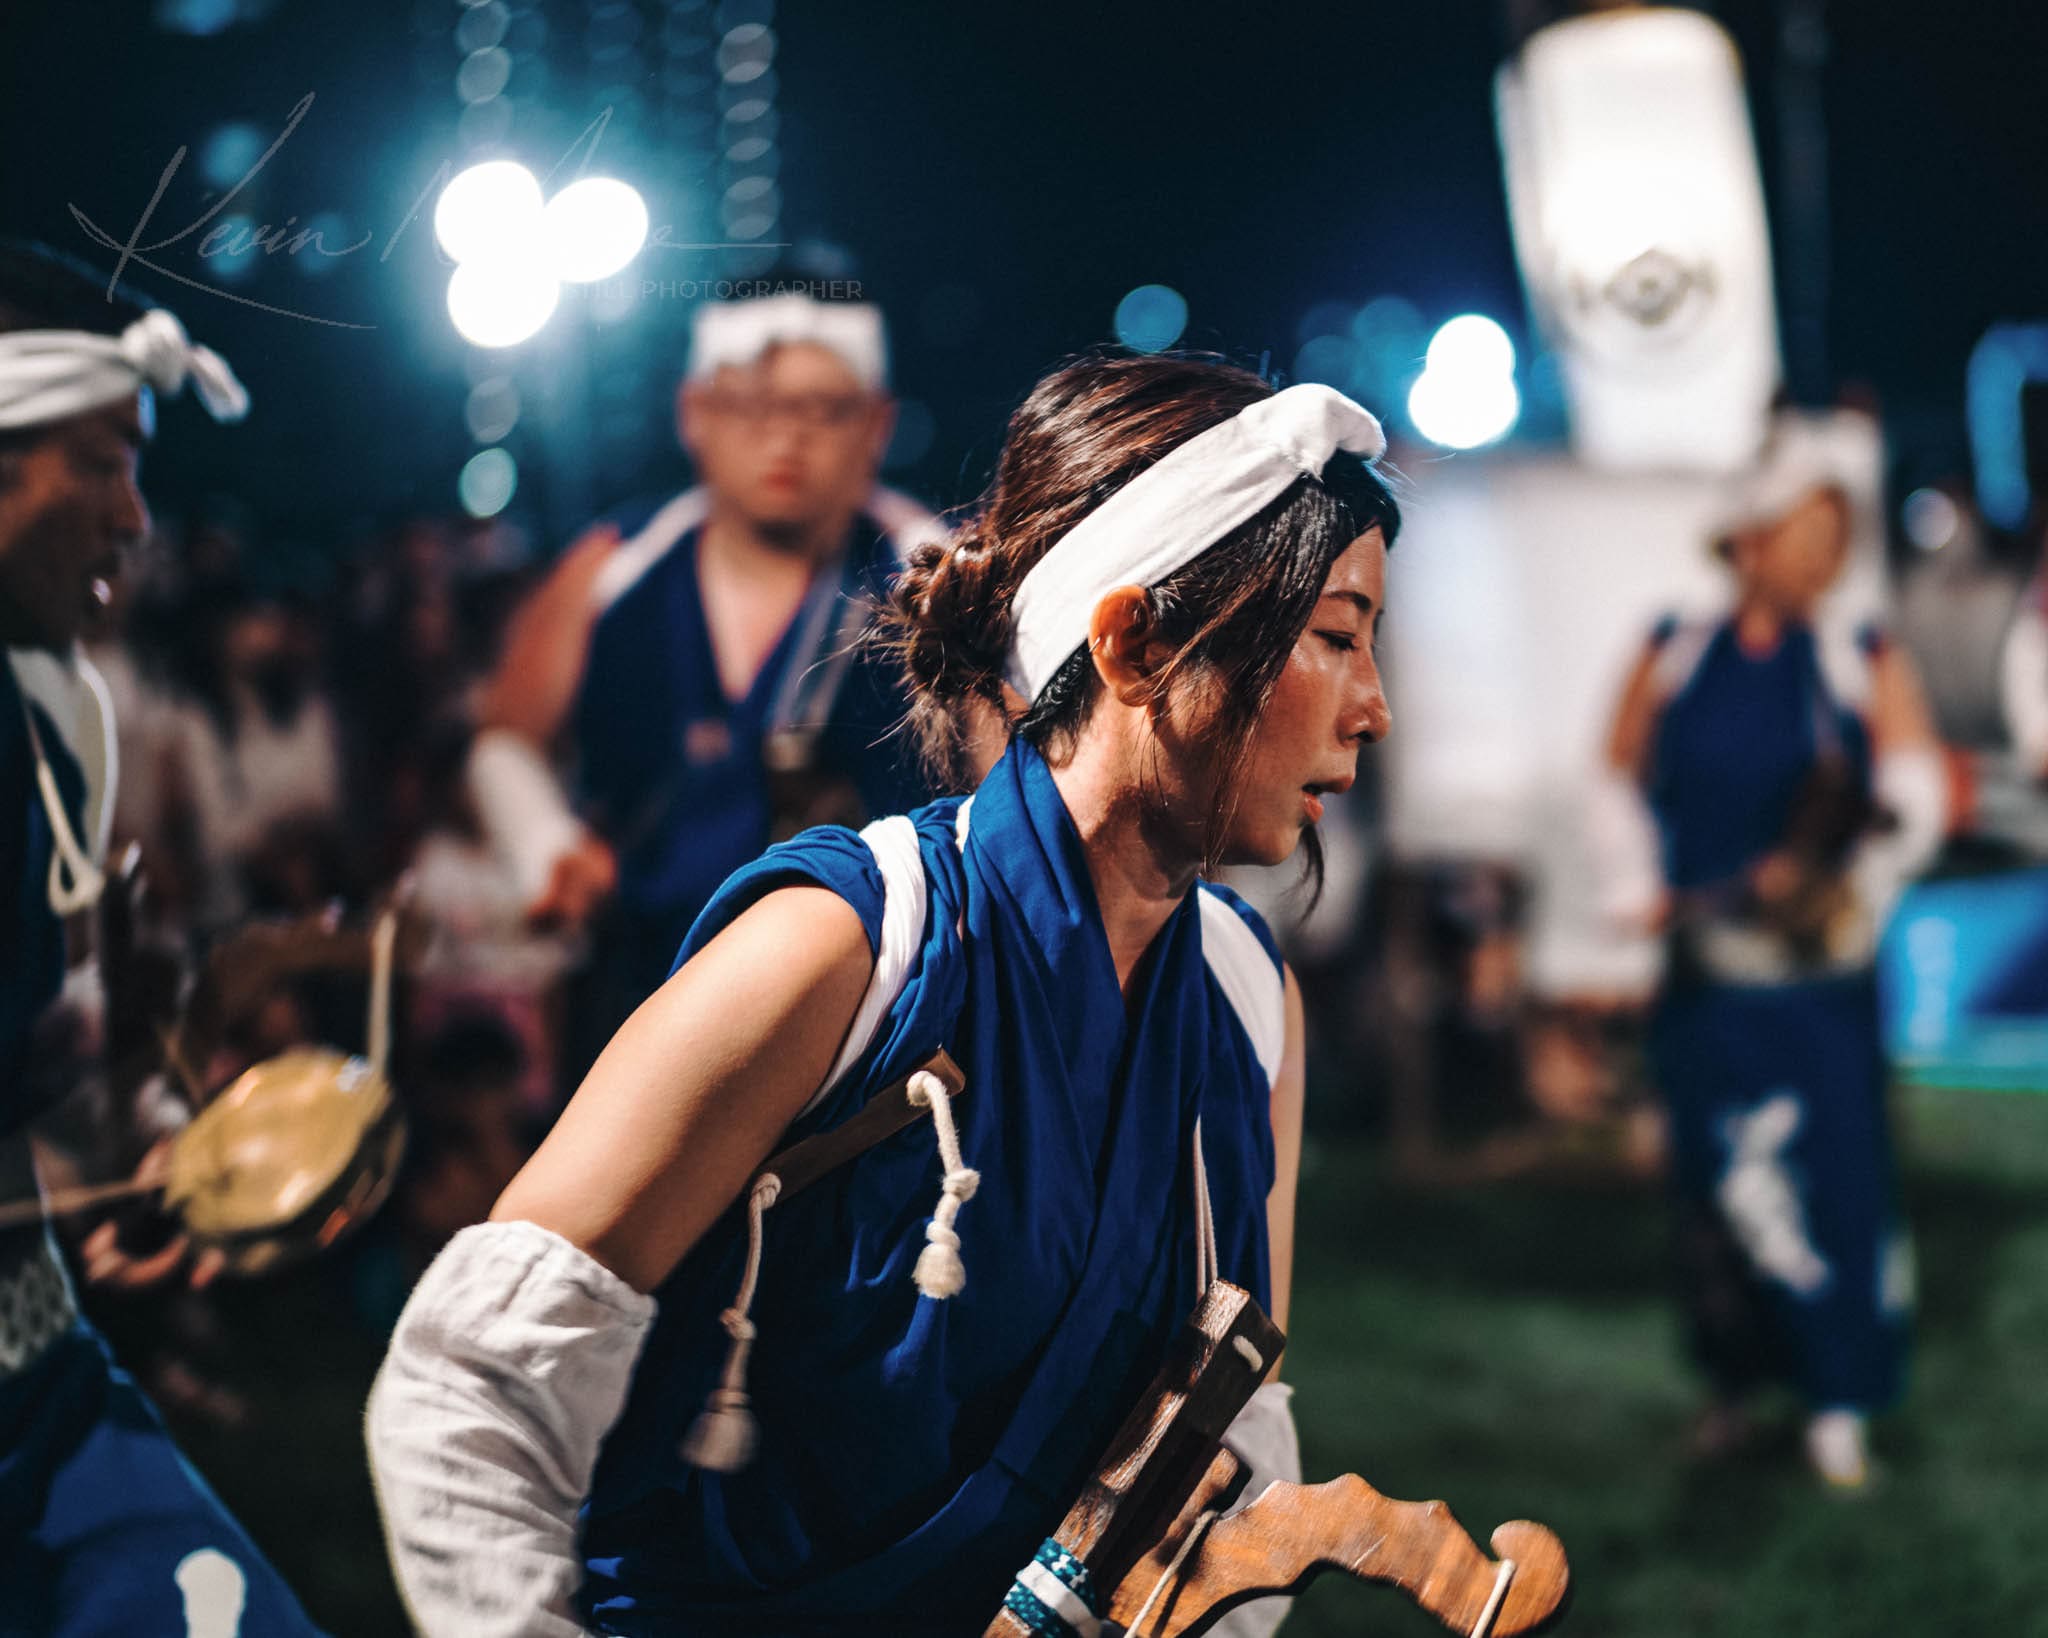 Focused Yukata-clad performer in action at a vibrant Japanese matsuri festival at night.